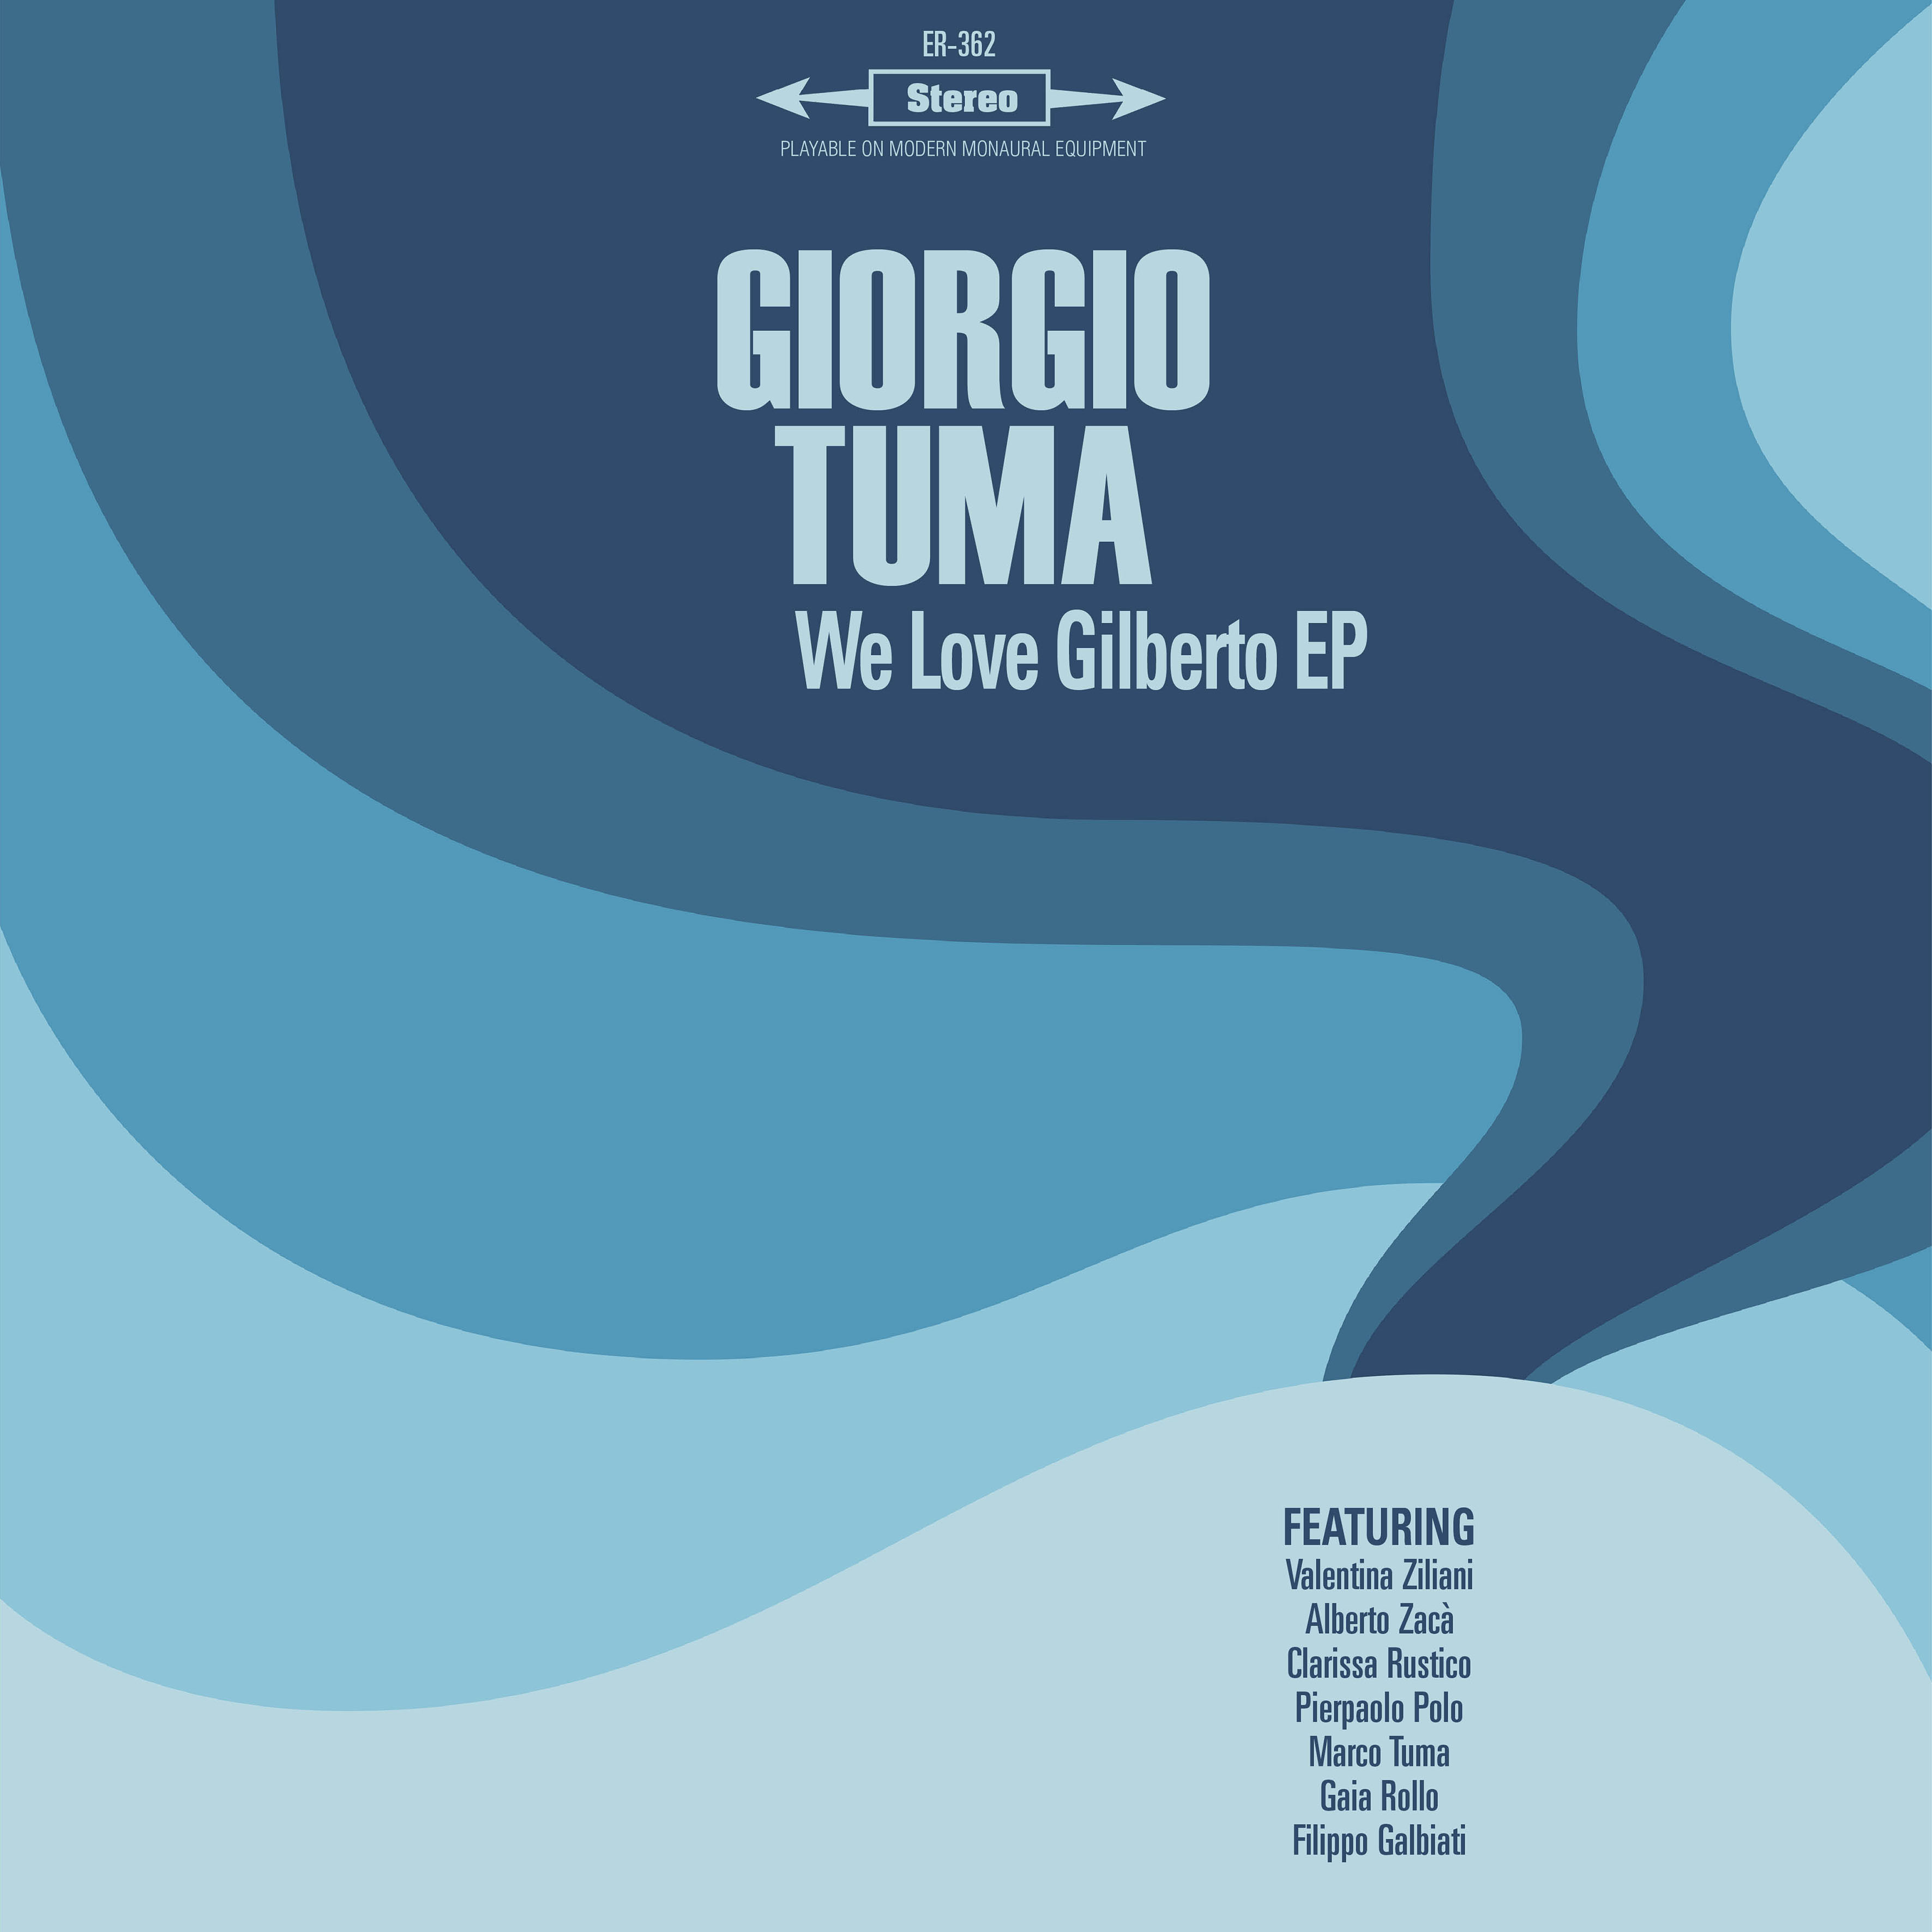 GIORGIO TUMA "We Love Gilberto EP" Single 7"